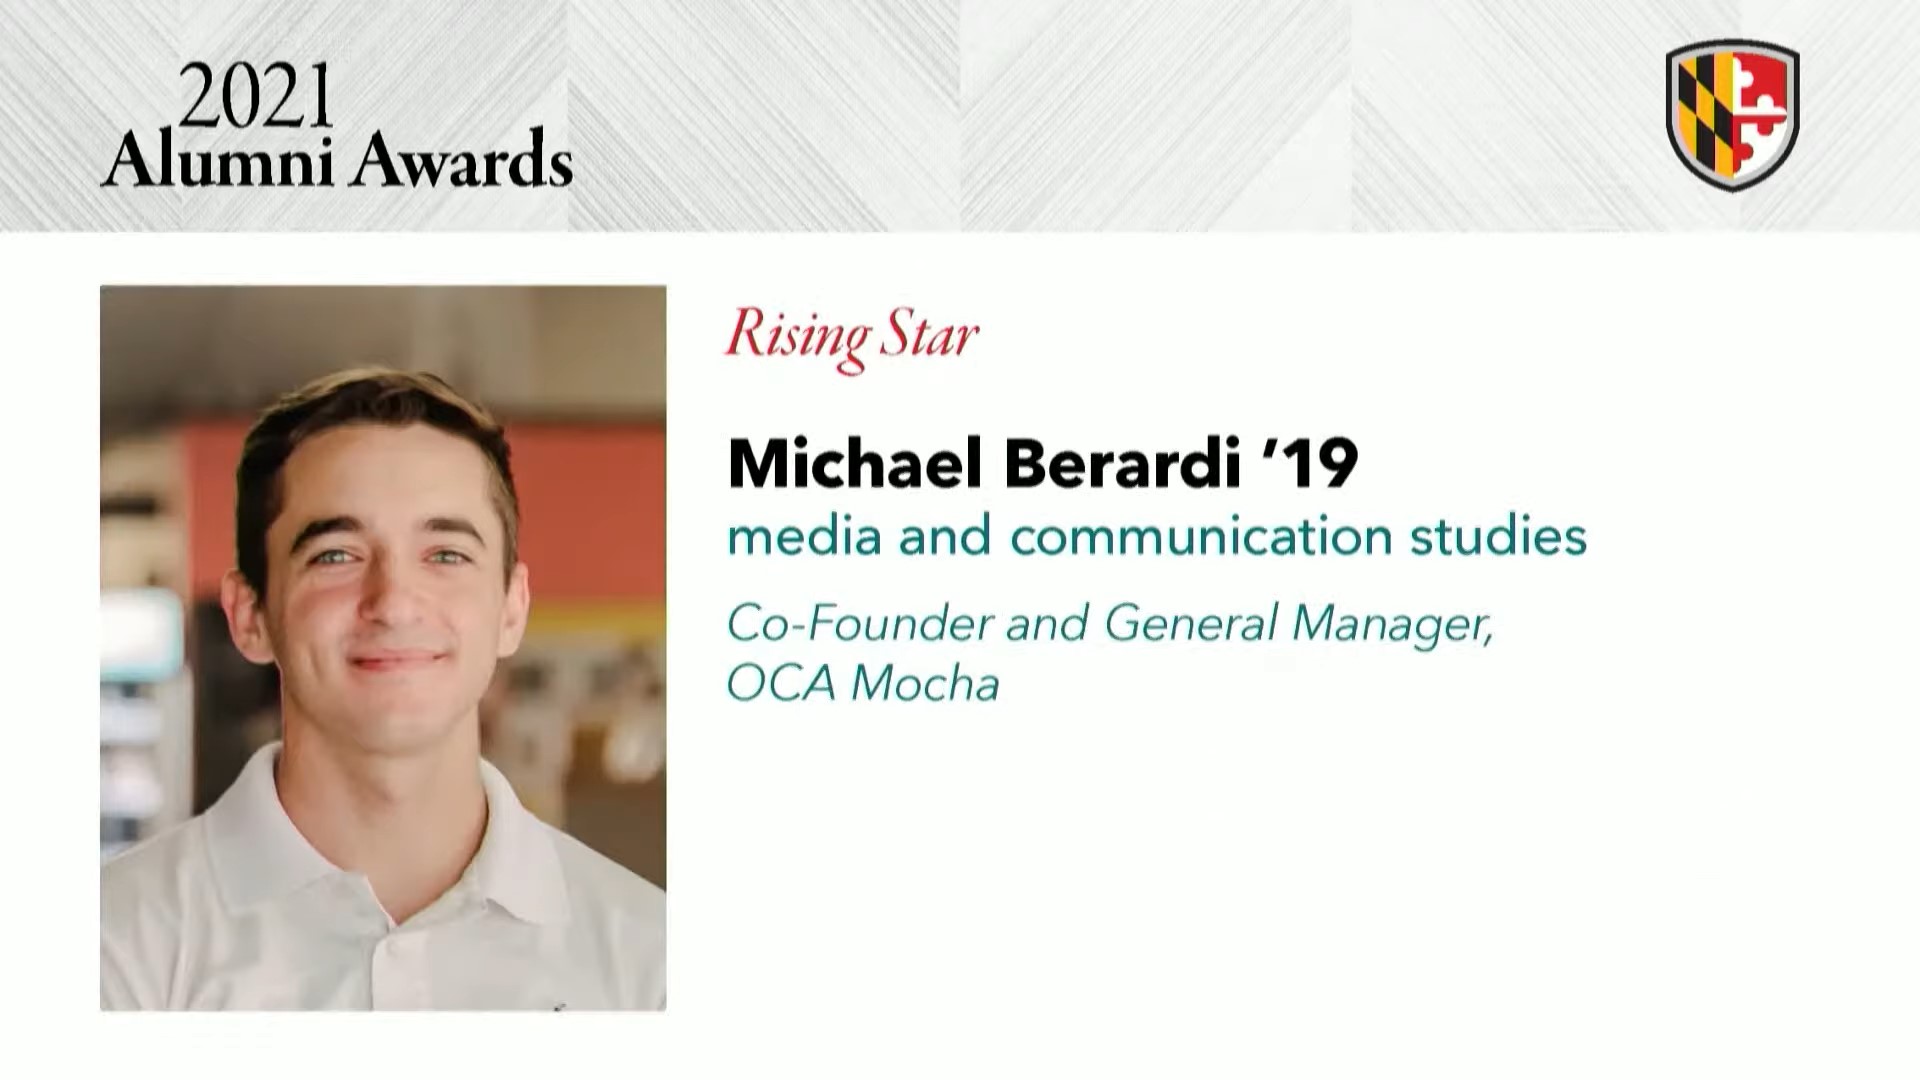 Congratulations to Michael Berardi!